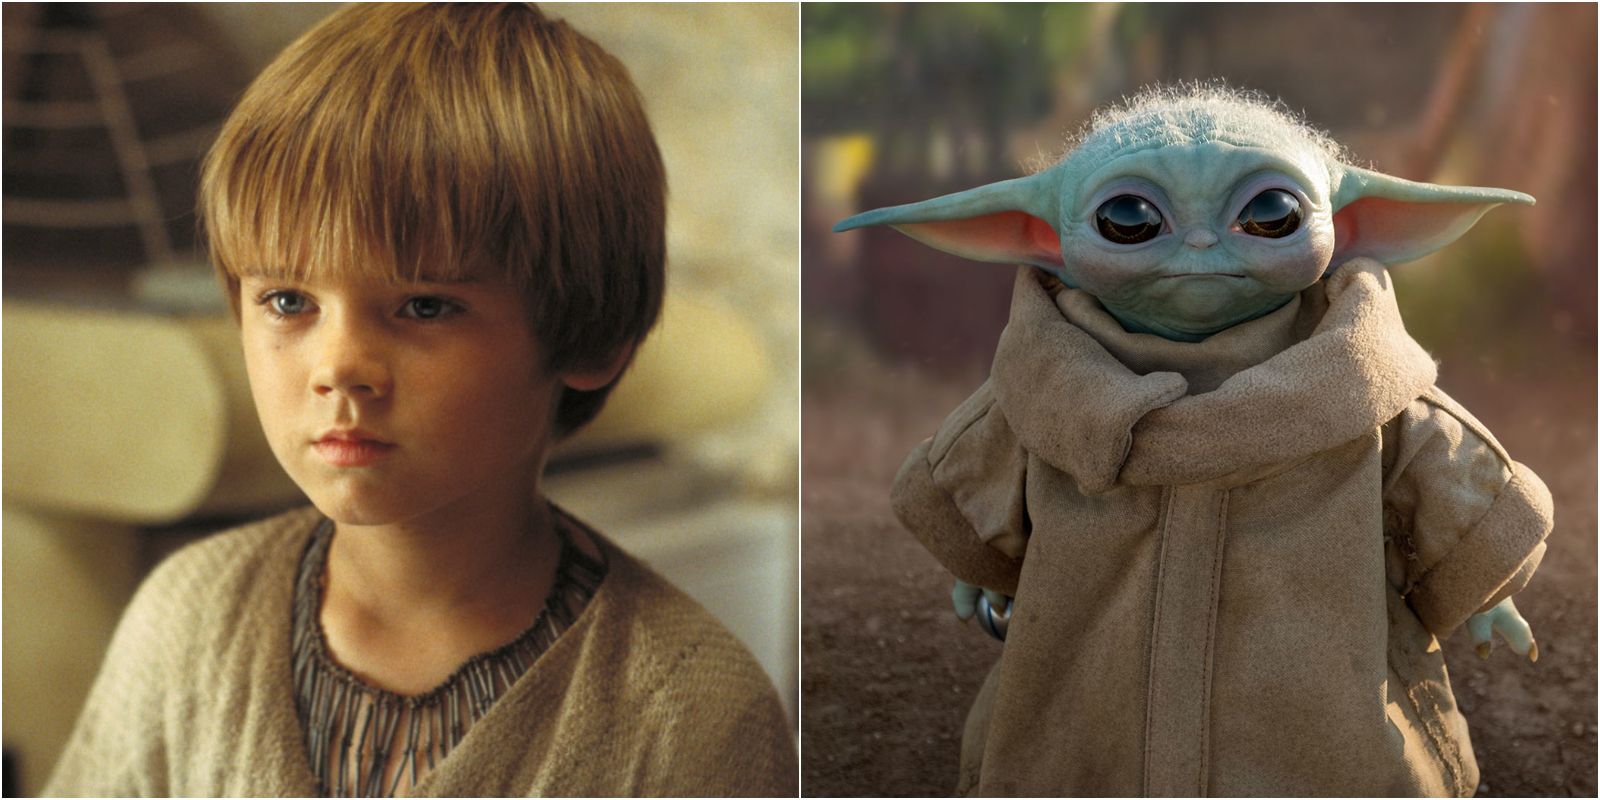 Anakin Skywalker in The Phantom Menace and Baby Yoda in The Mandalorian